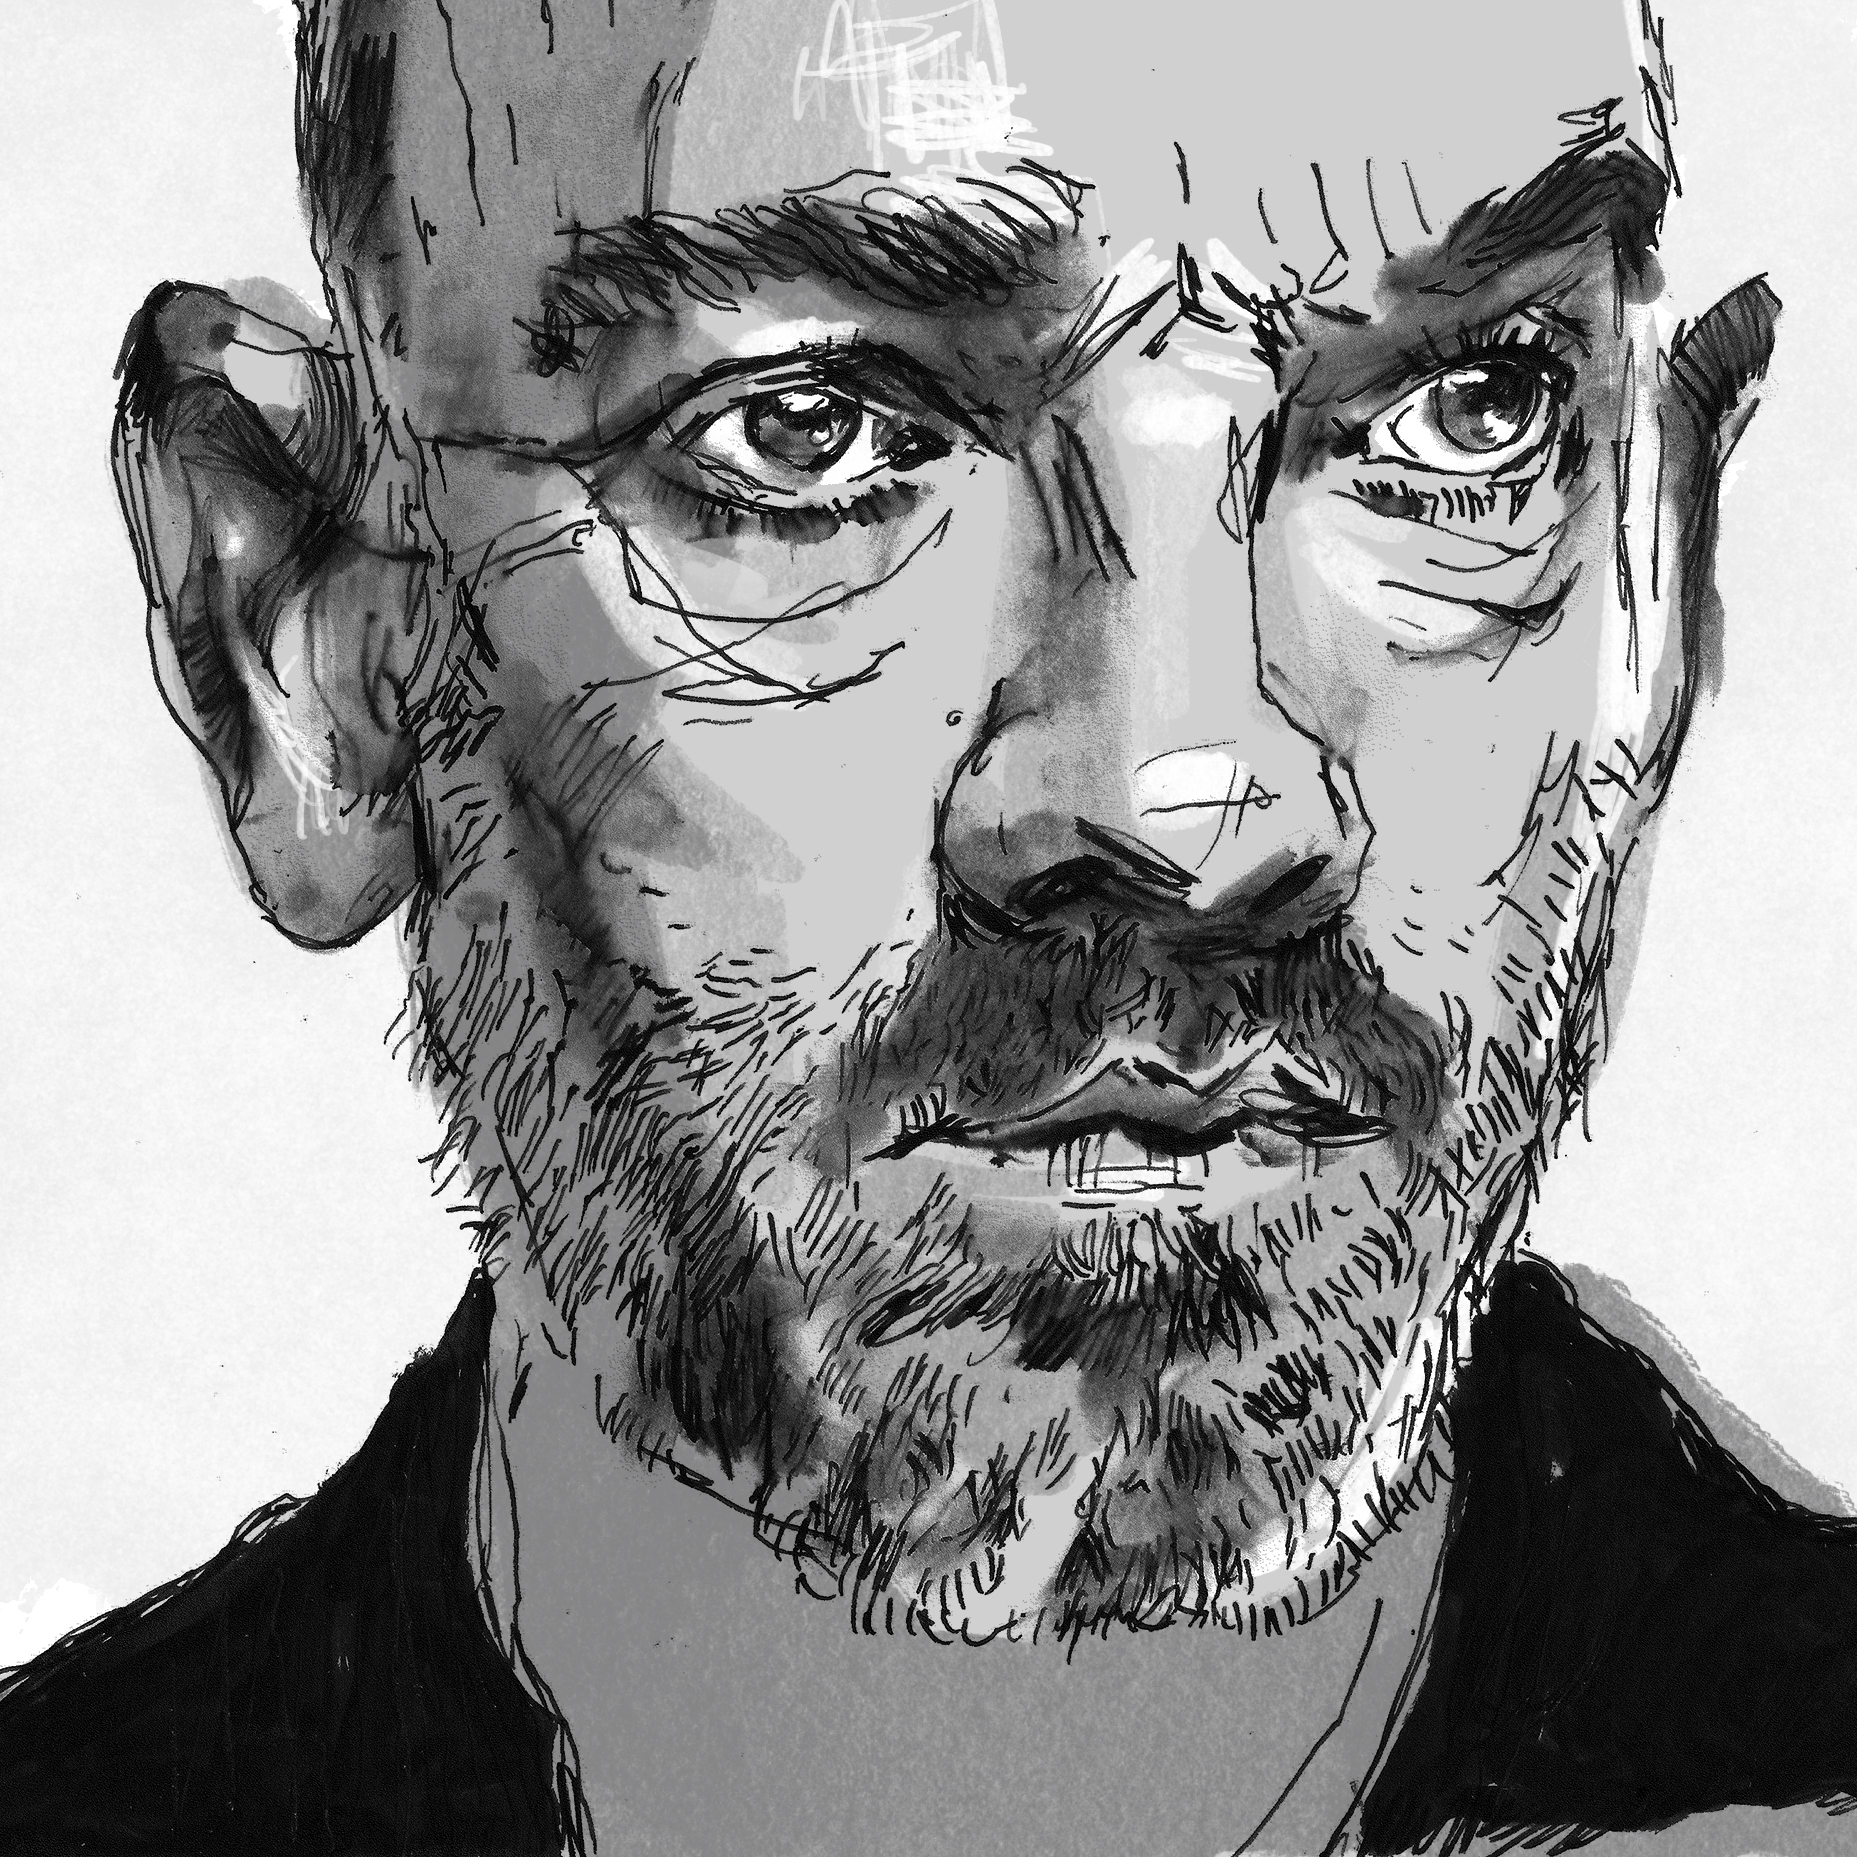 Illustration of Michael Stipe